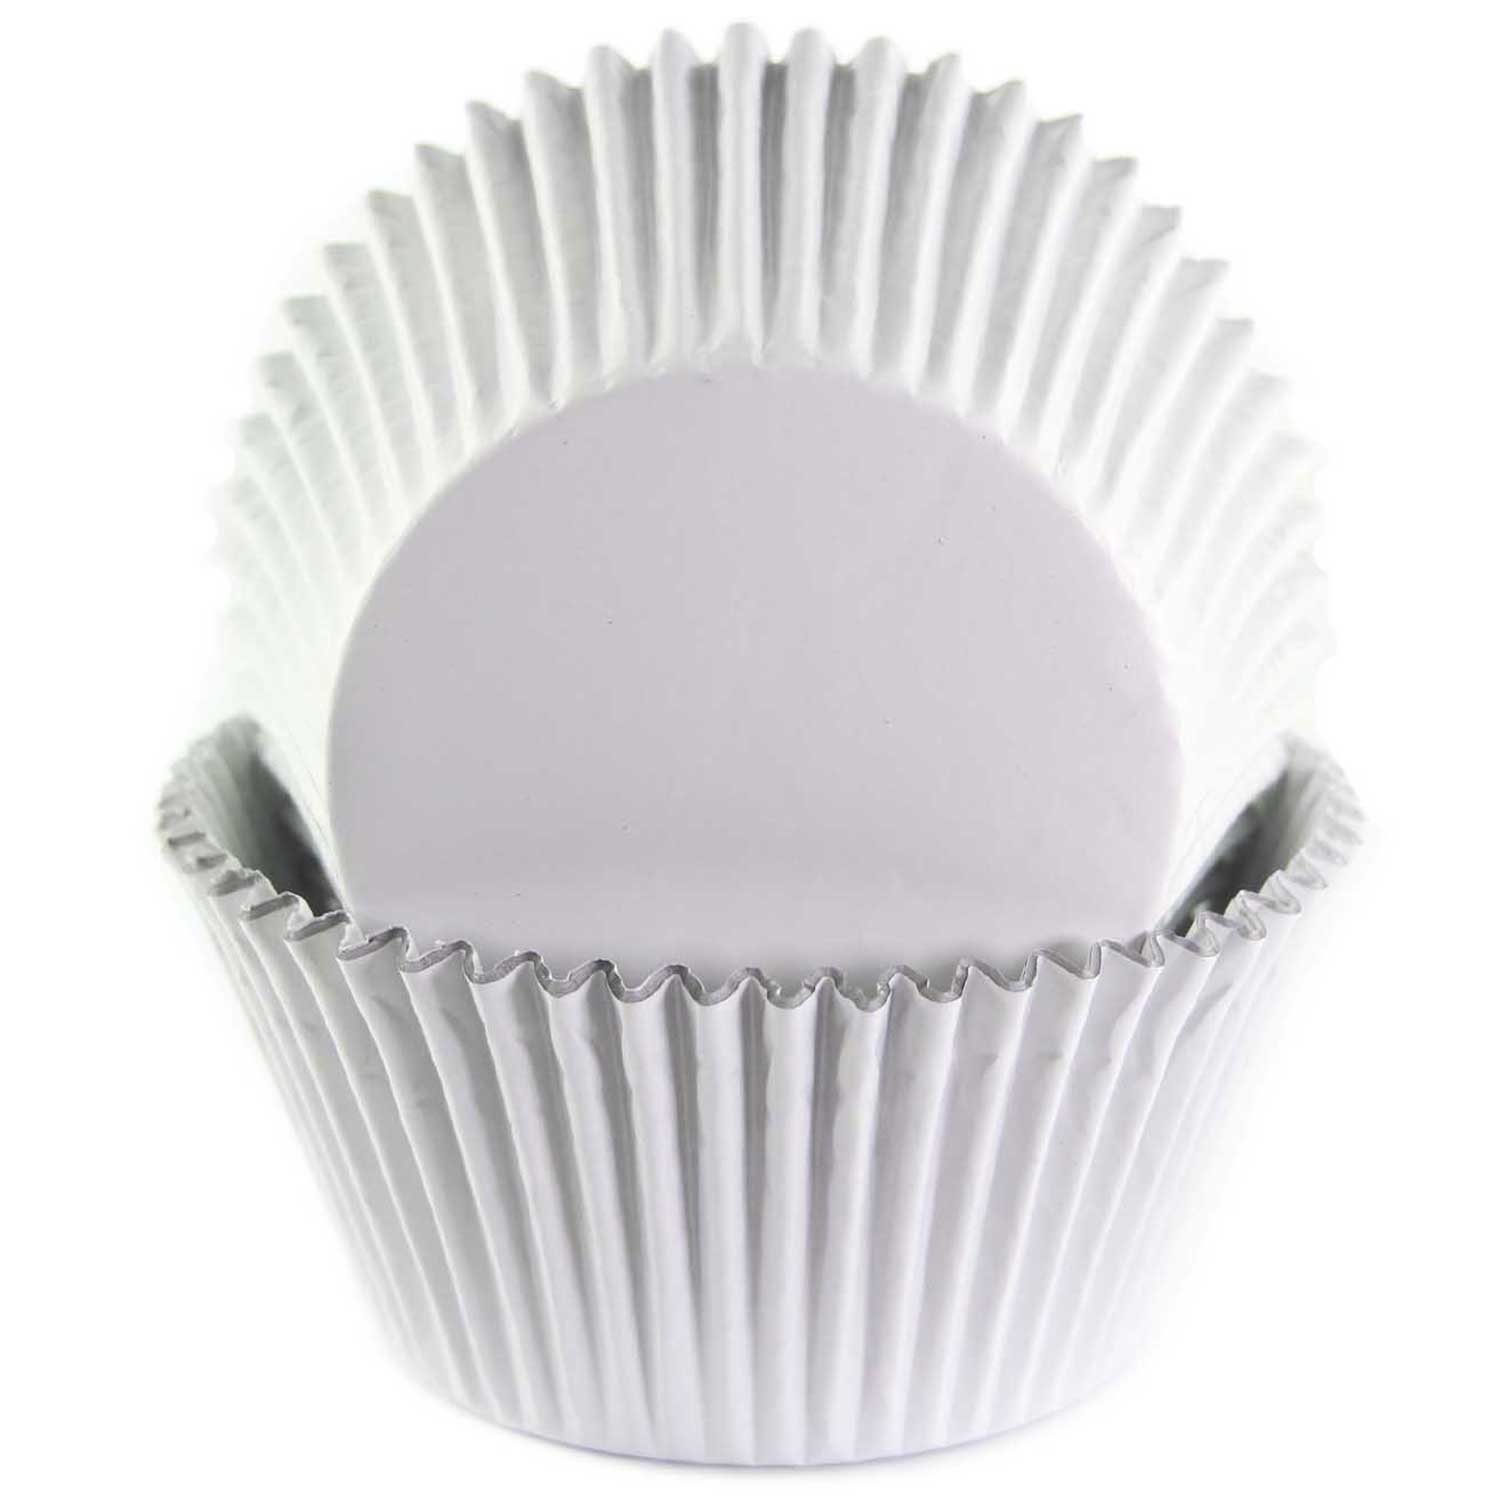 White Foil Jumbo Cupcake Liners